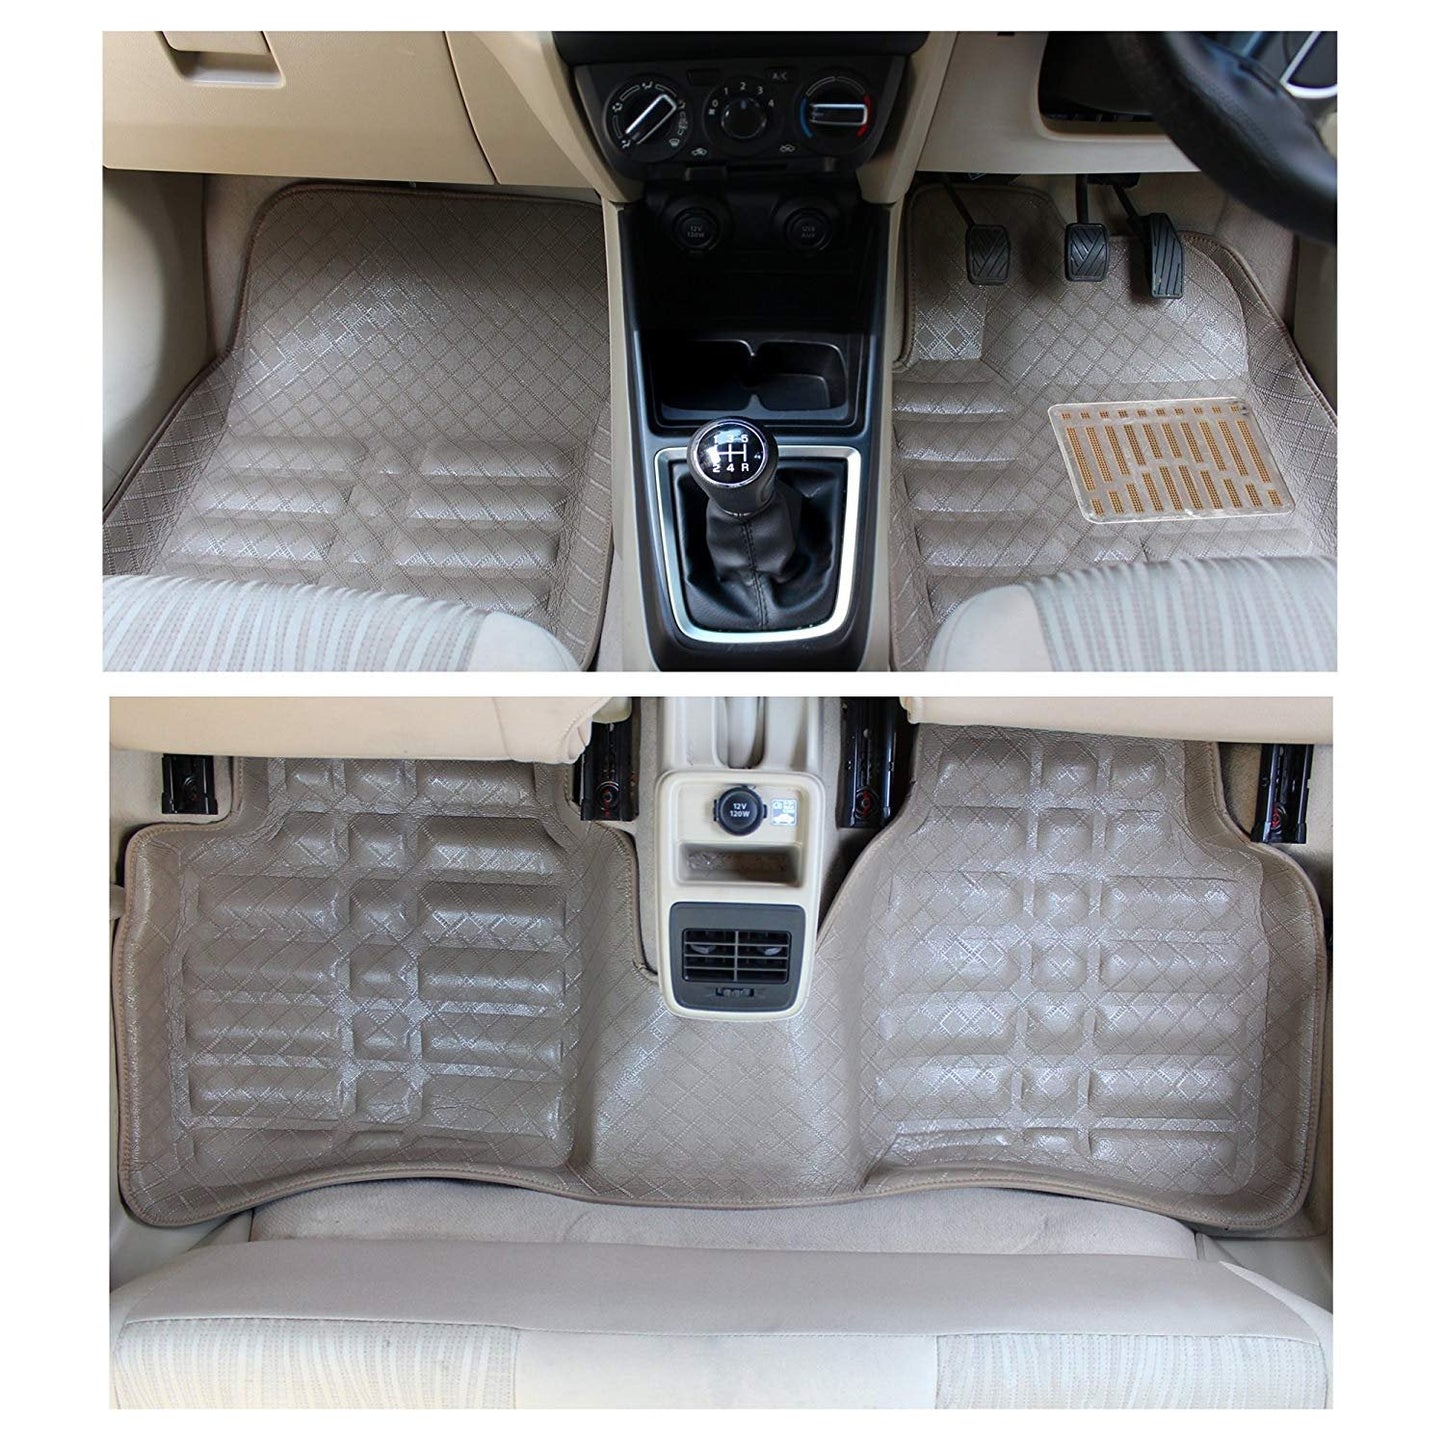 Oshotto 4D Beige Car Tray Mats For Maruti Suzuki Baleno 2015-2022 - Set of 3 (2 pcs Front & one Long Single Rear pc)